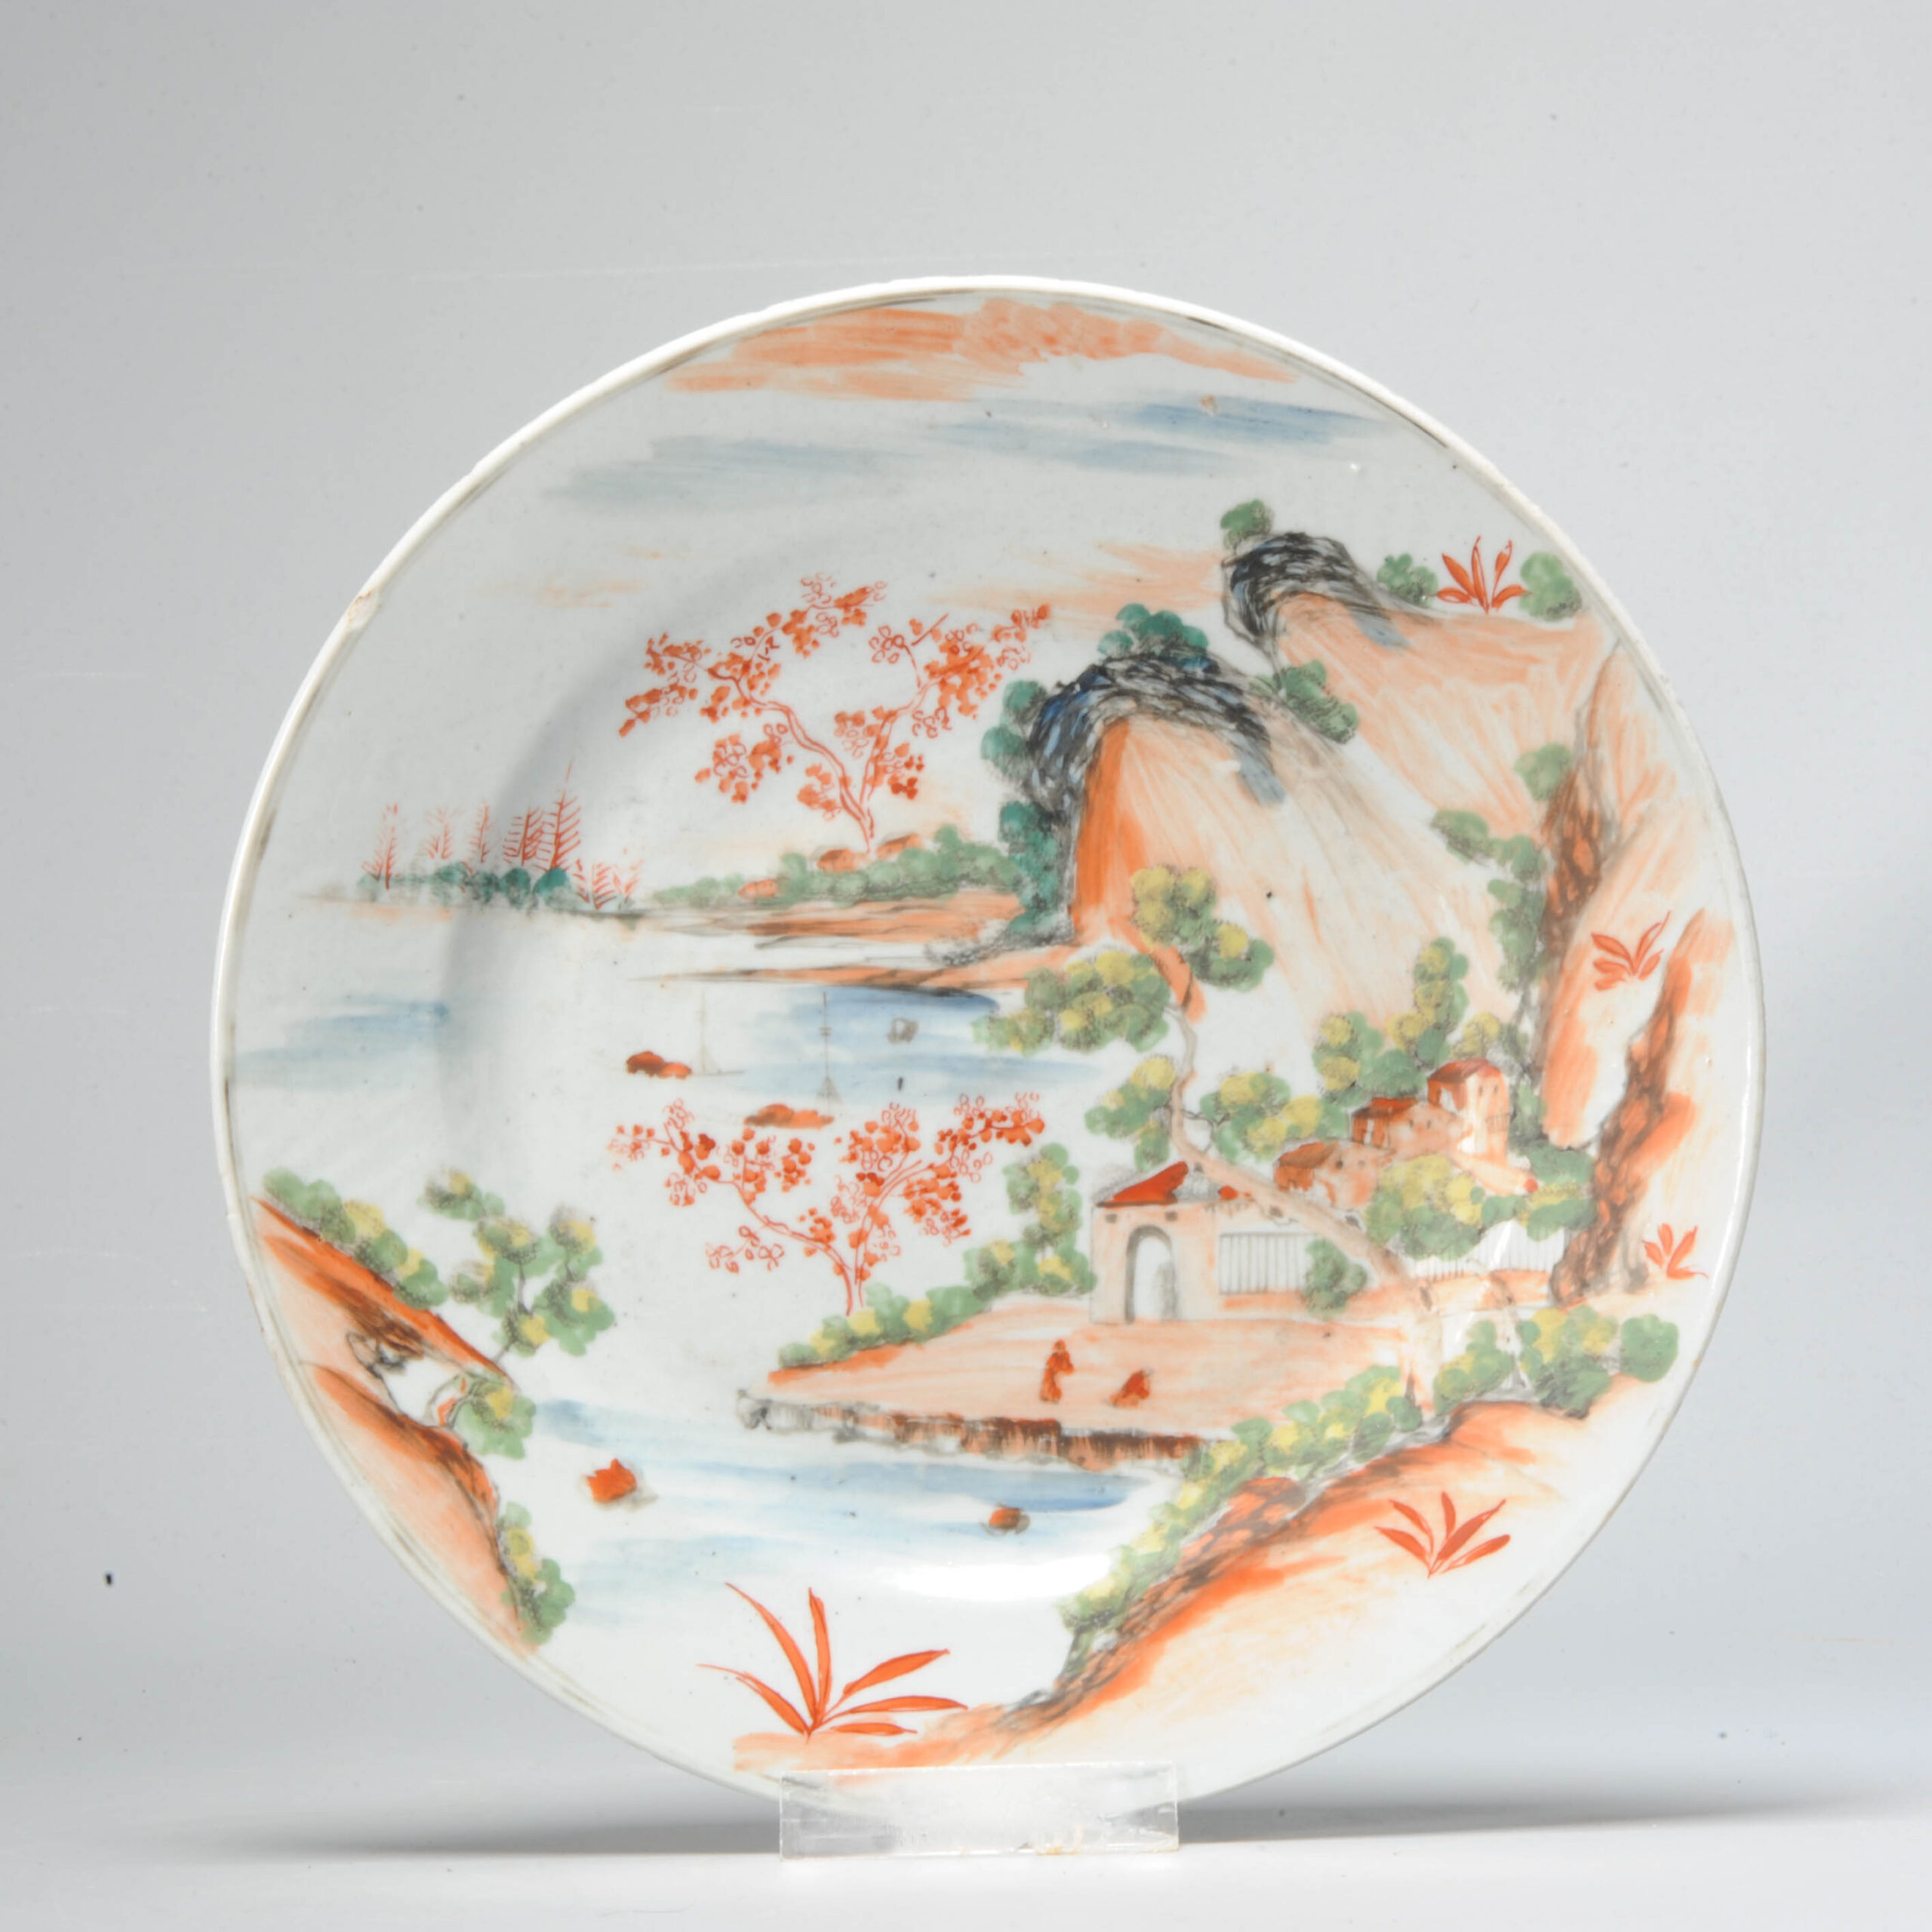 1057 Antique Chinese porcelain plate with Amsterdam Bont Landscape Decoration